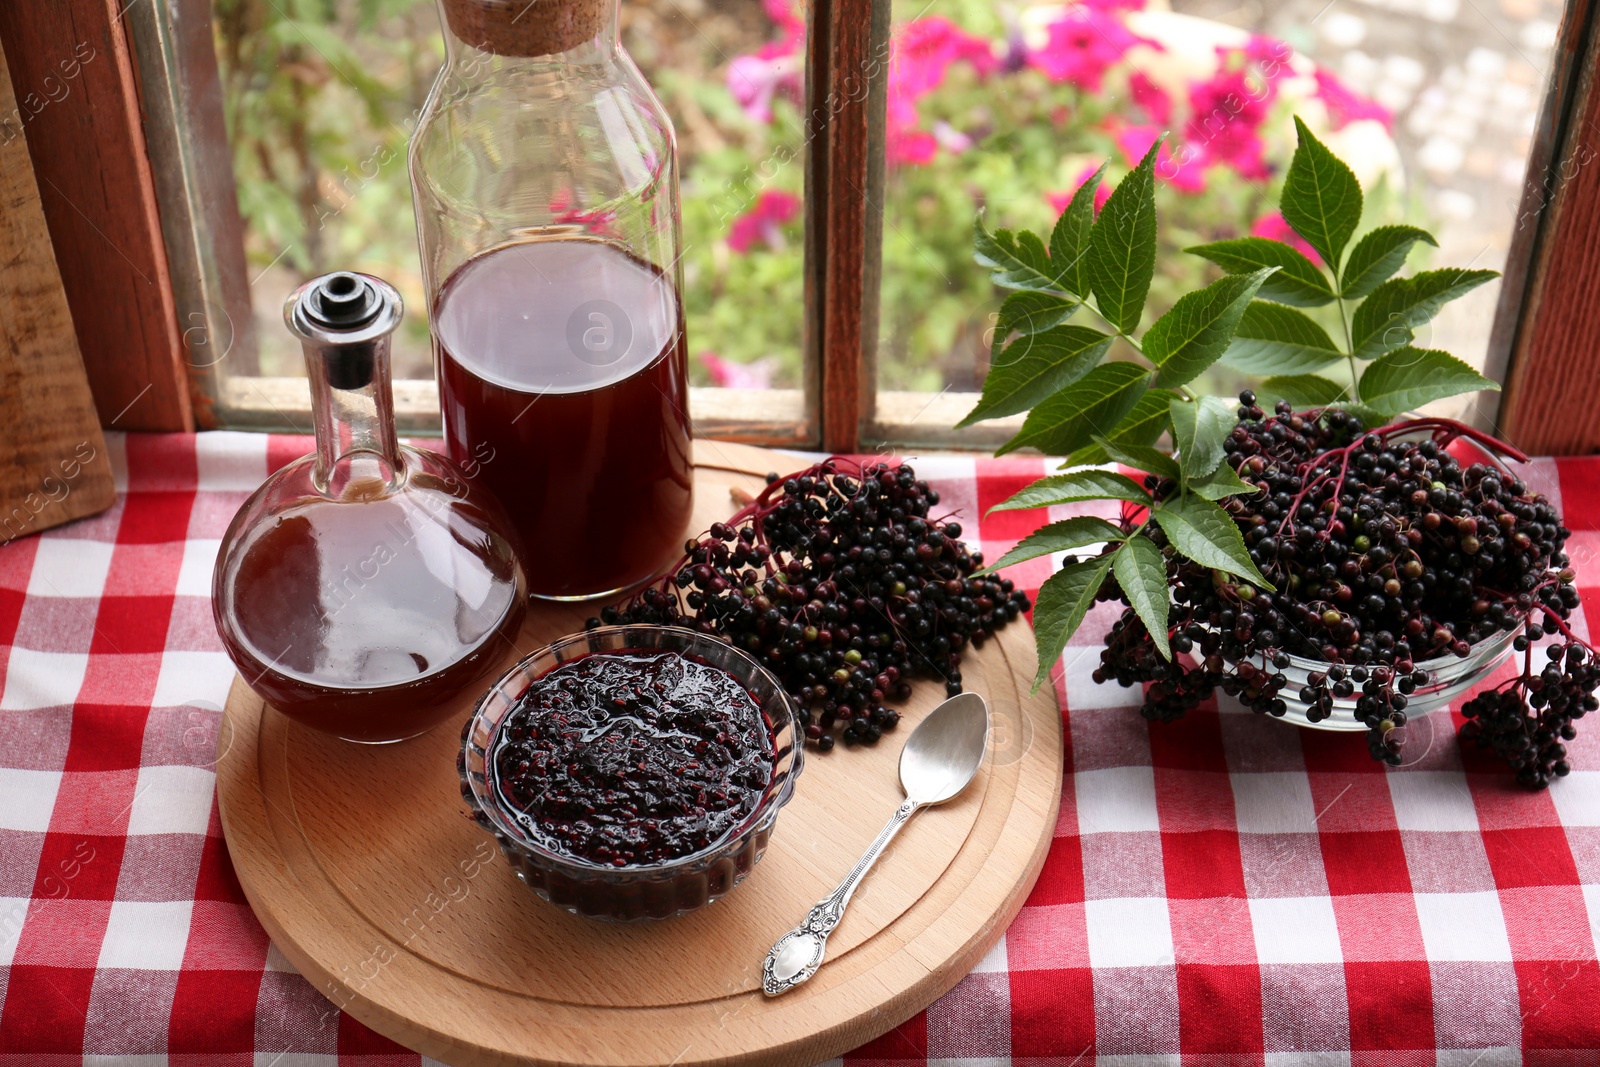 Photo of Elderberry drink and jam with Sambucus berries on table near window